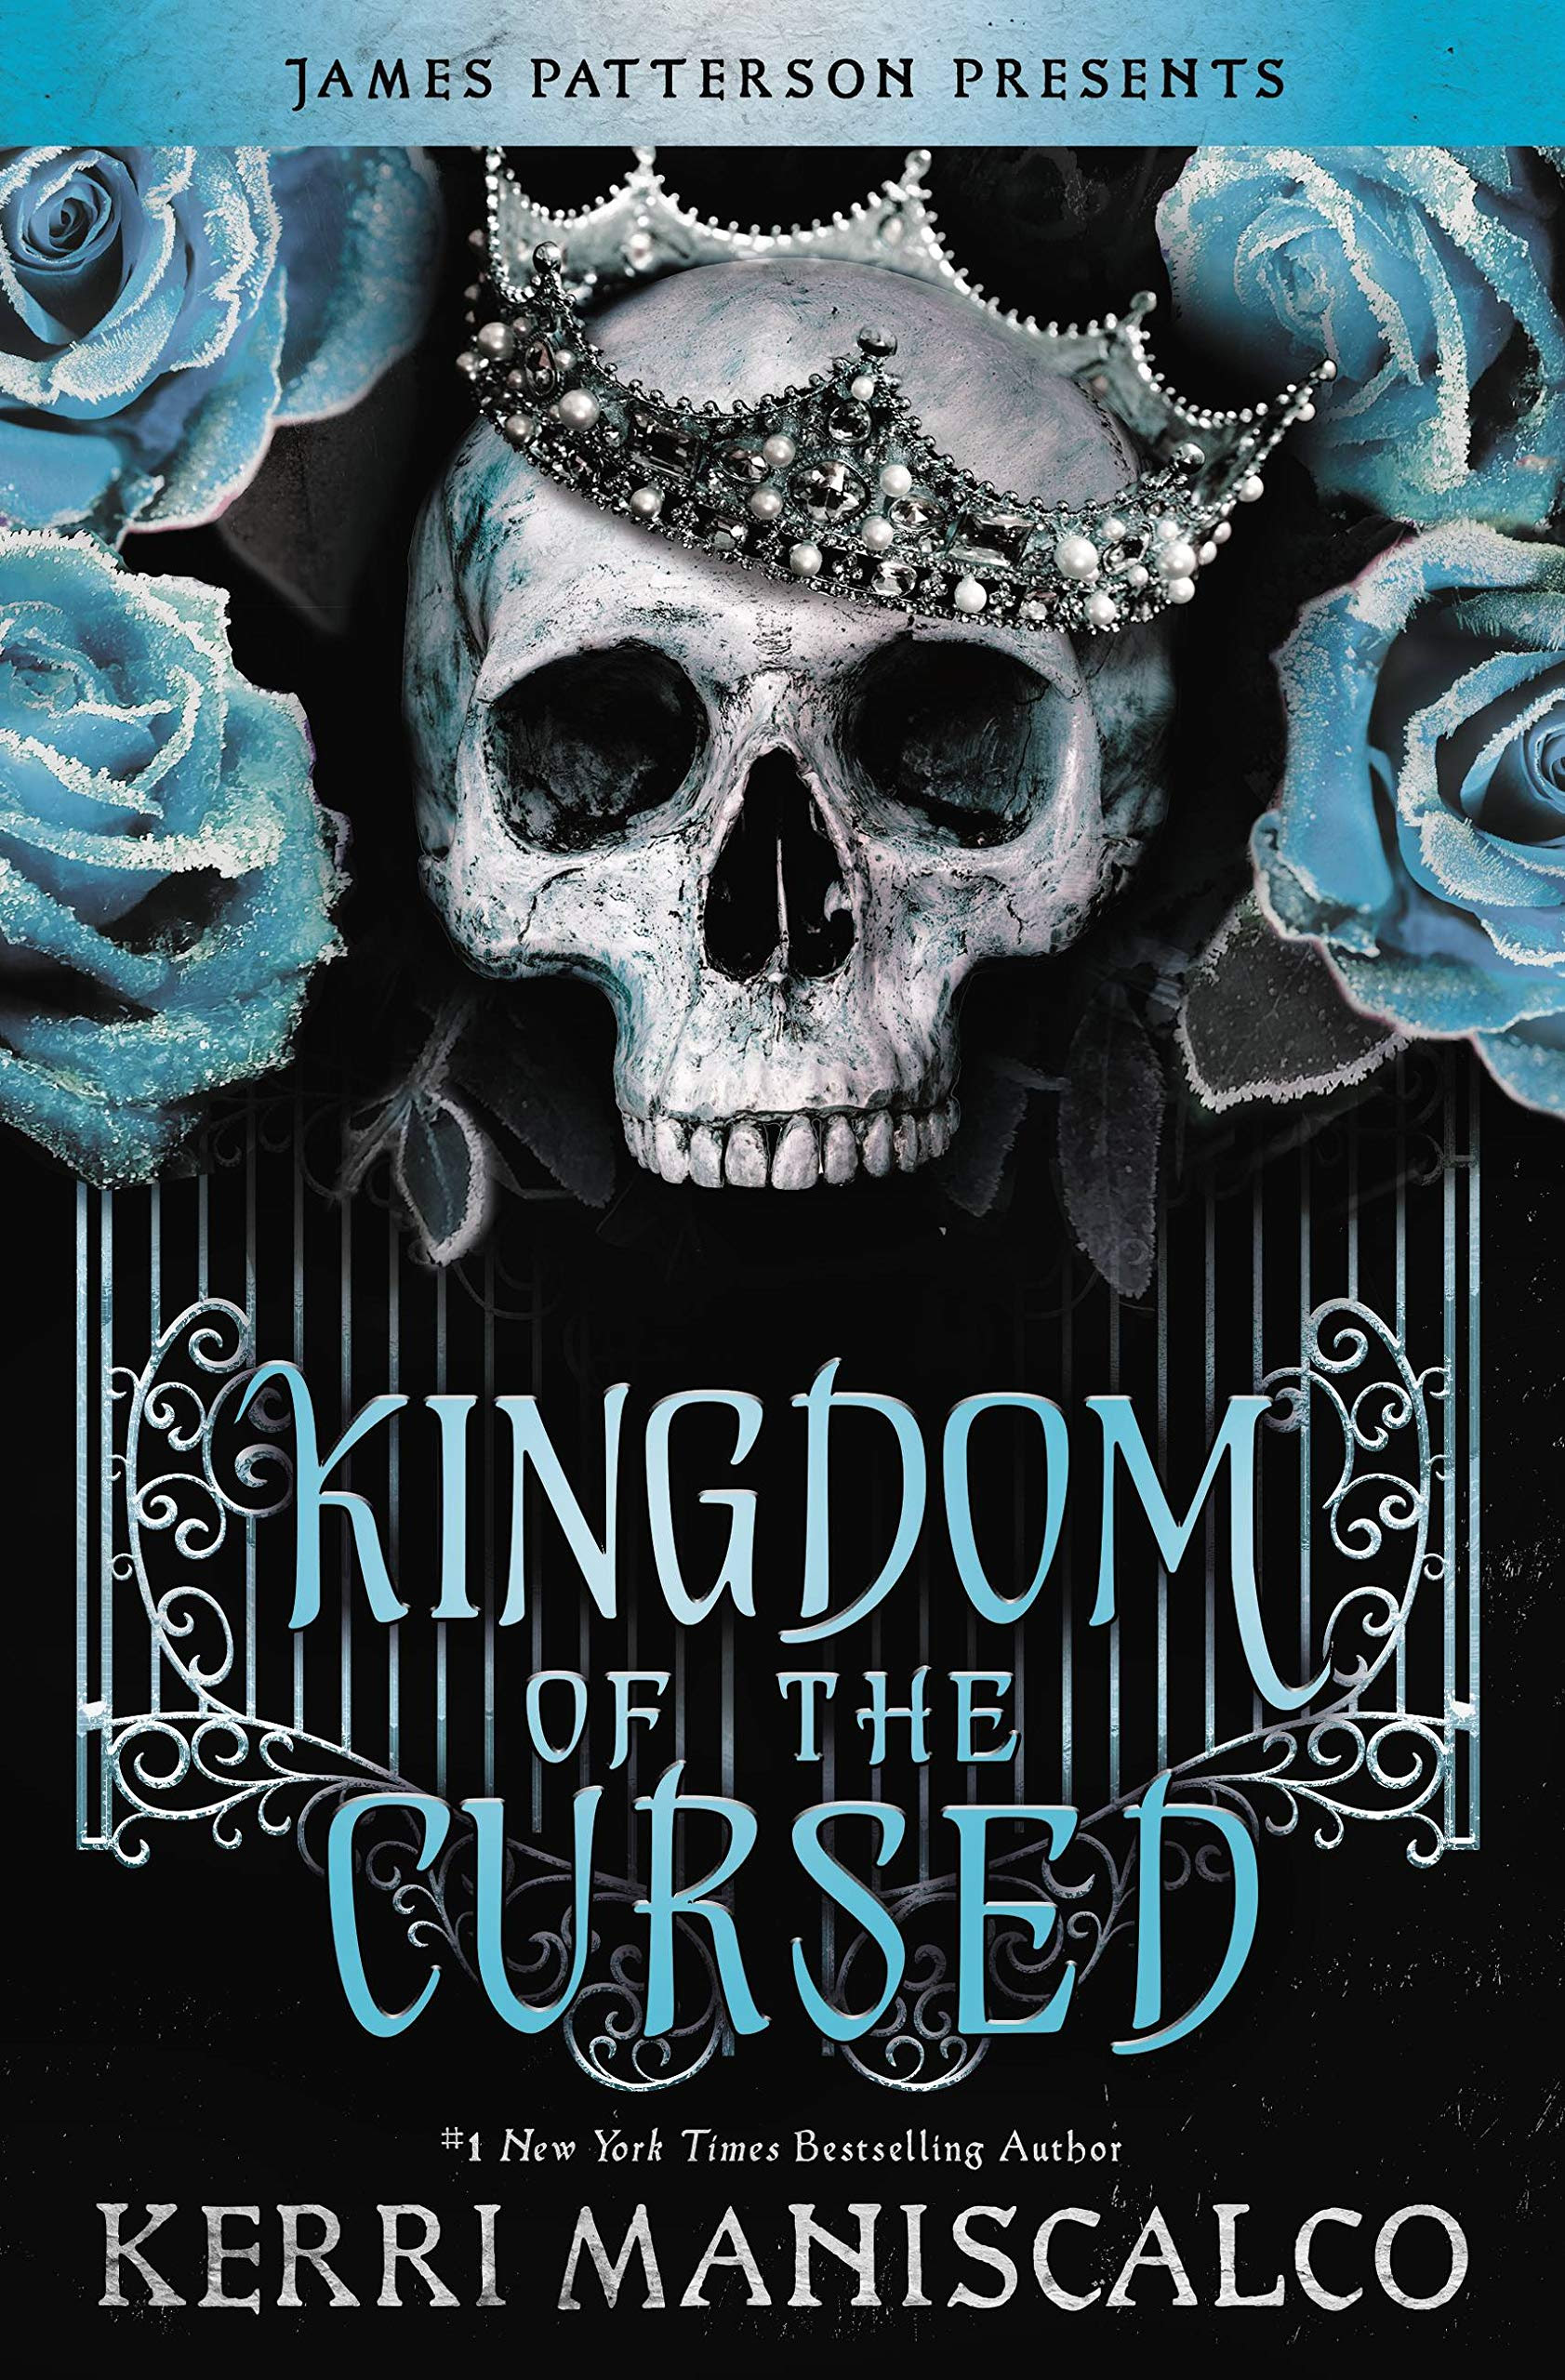 Kingdom of the Cursed (Kingdom of the Wicked, #2) in Kindle/PDF/EPUB